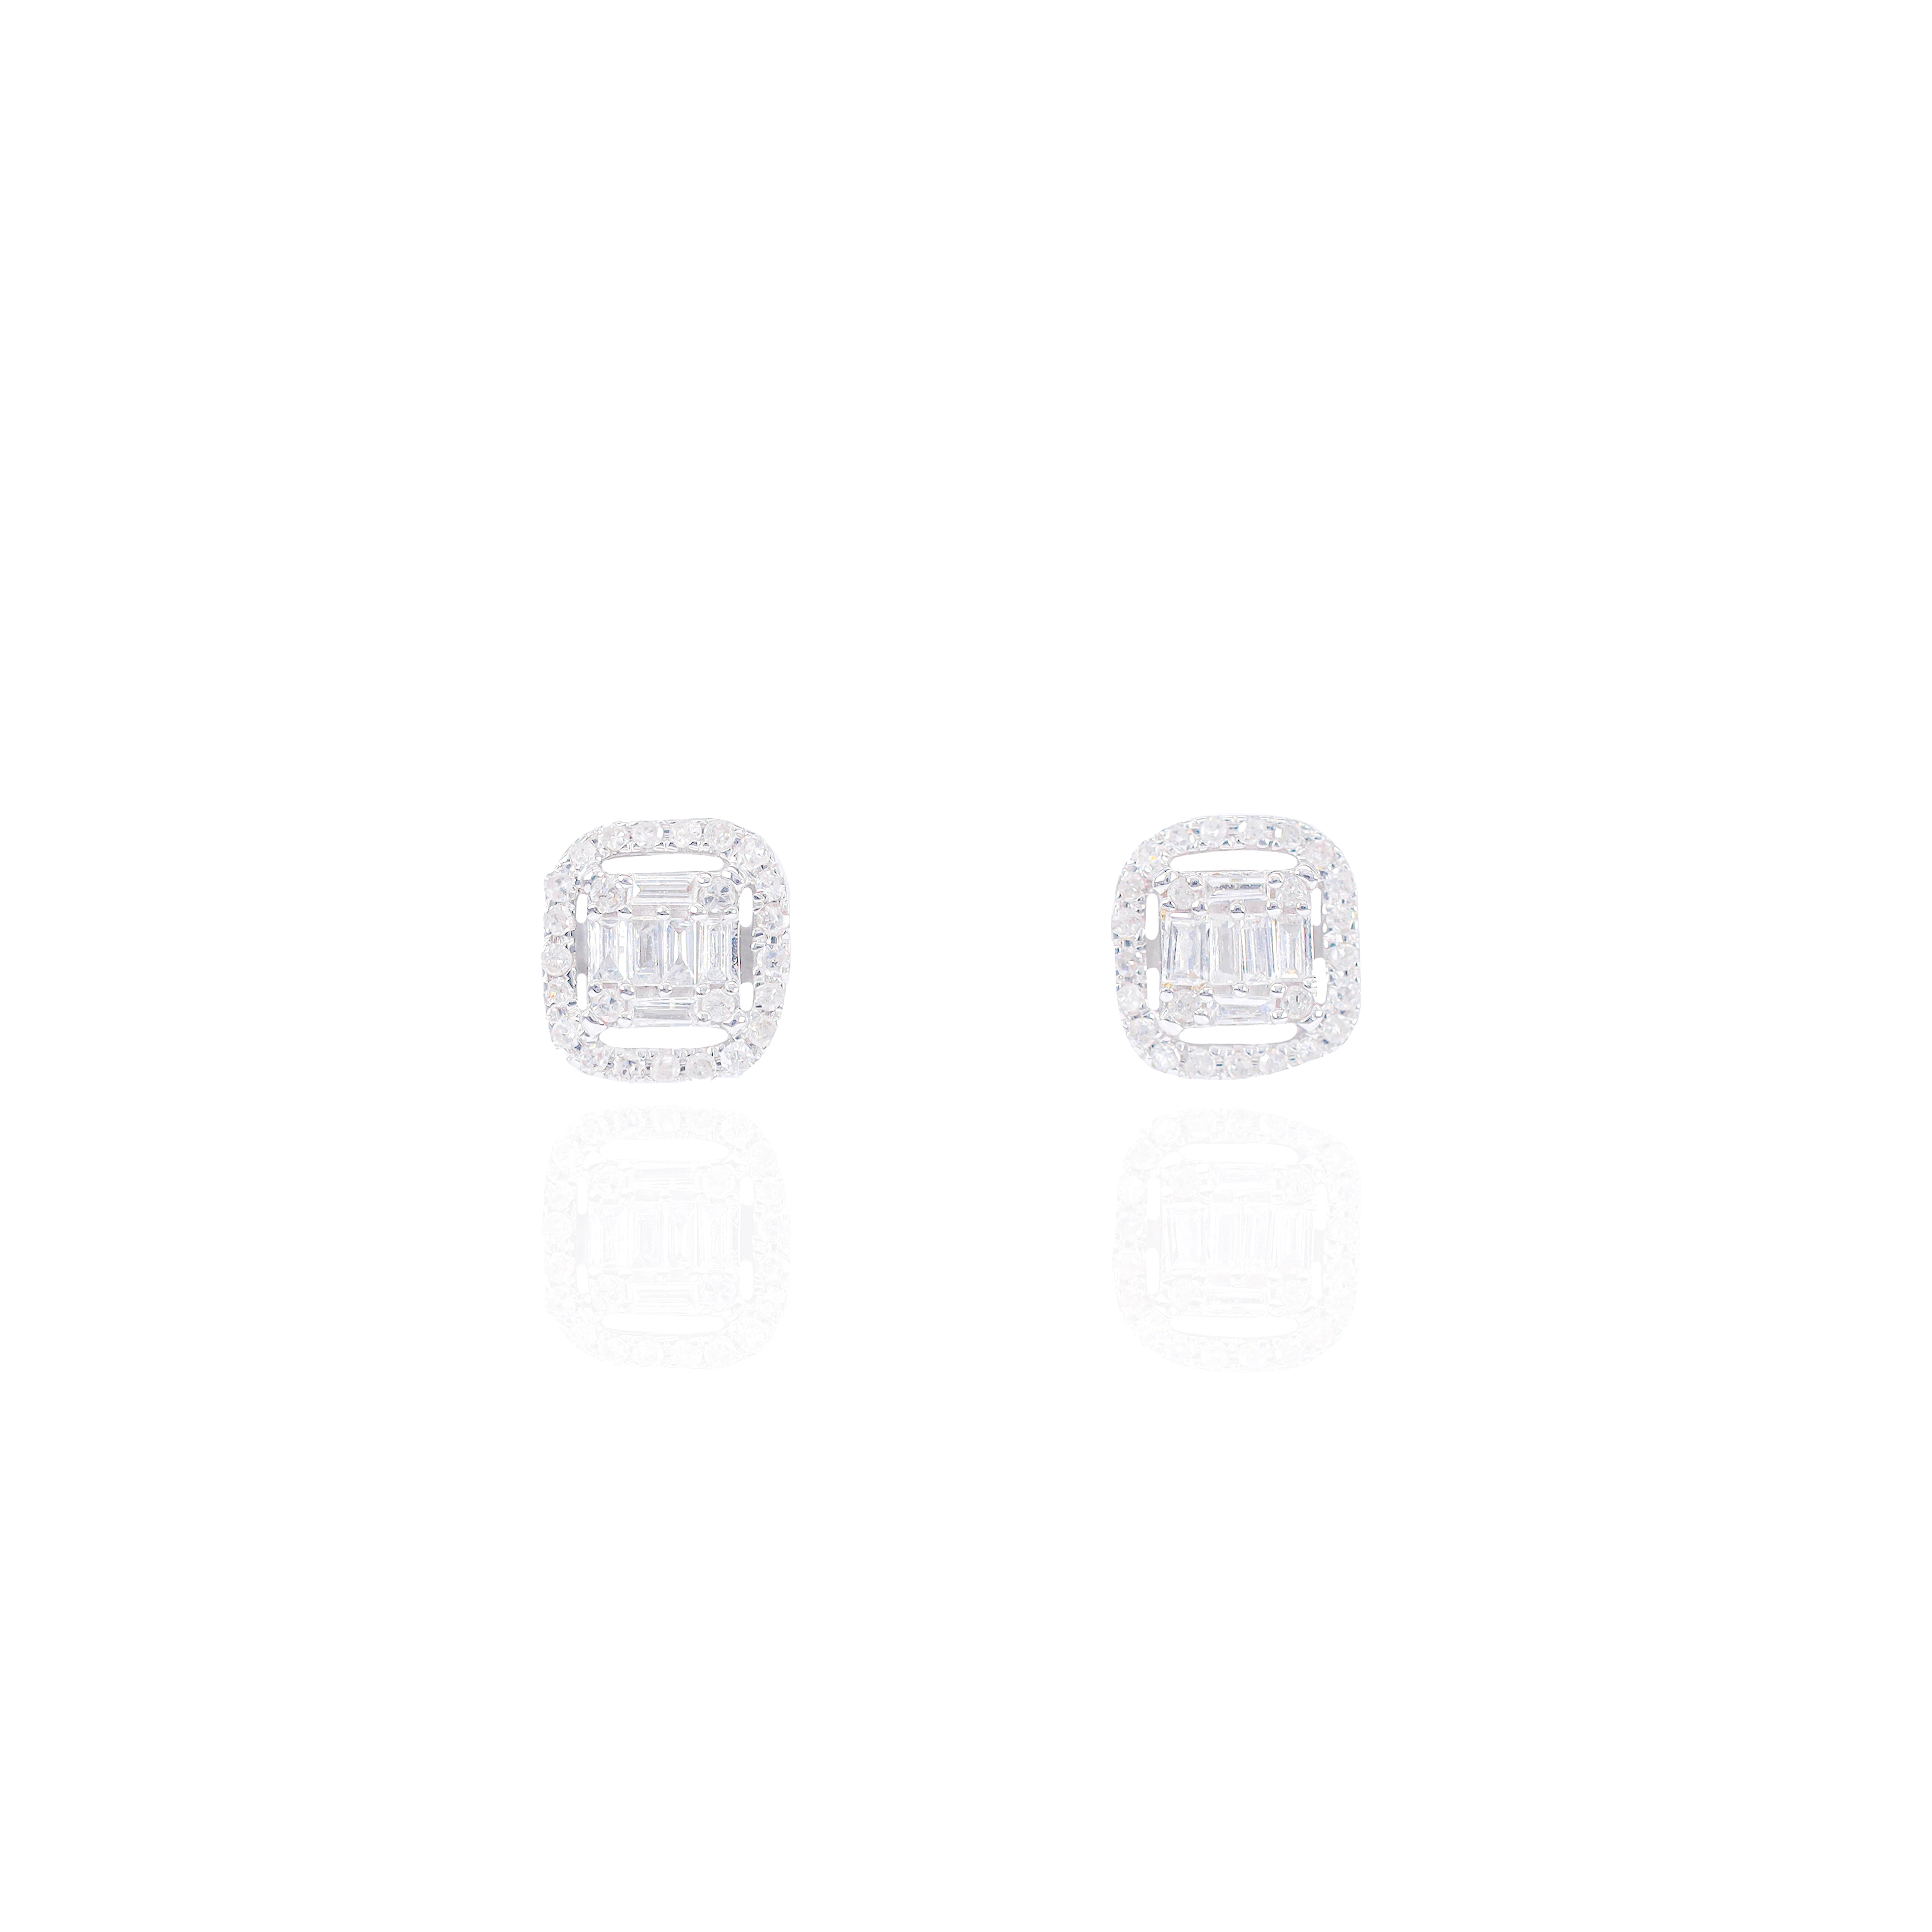 Square Shaped Baguette Diamond Earrings w/ Border